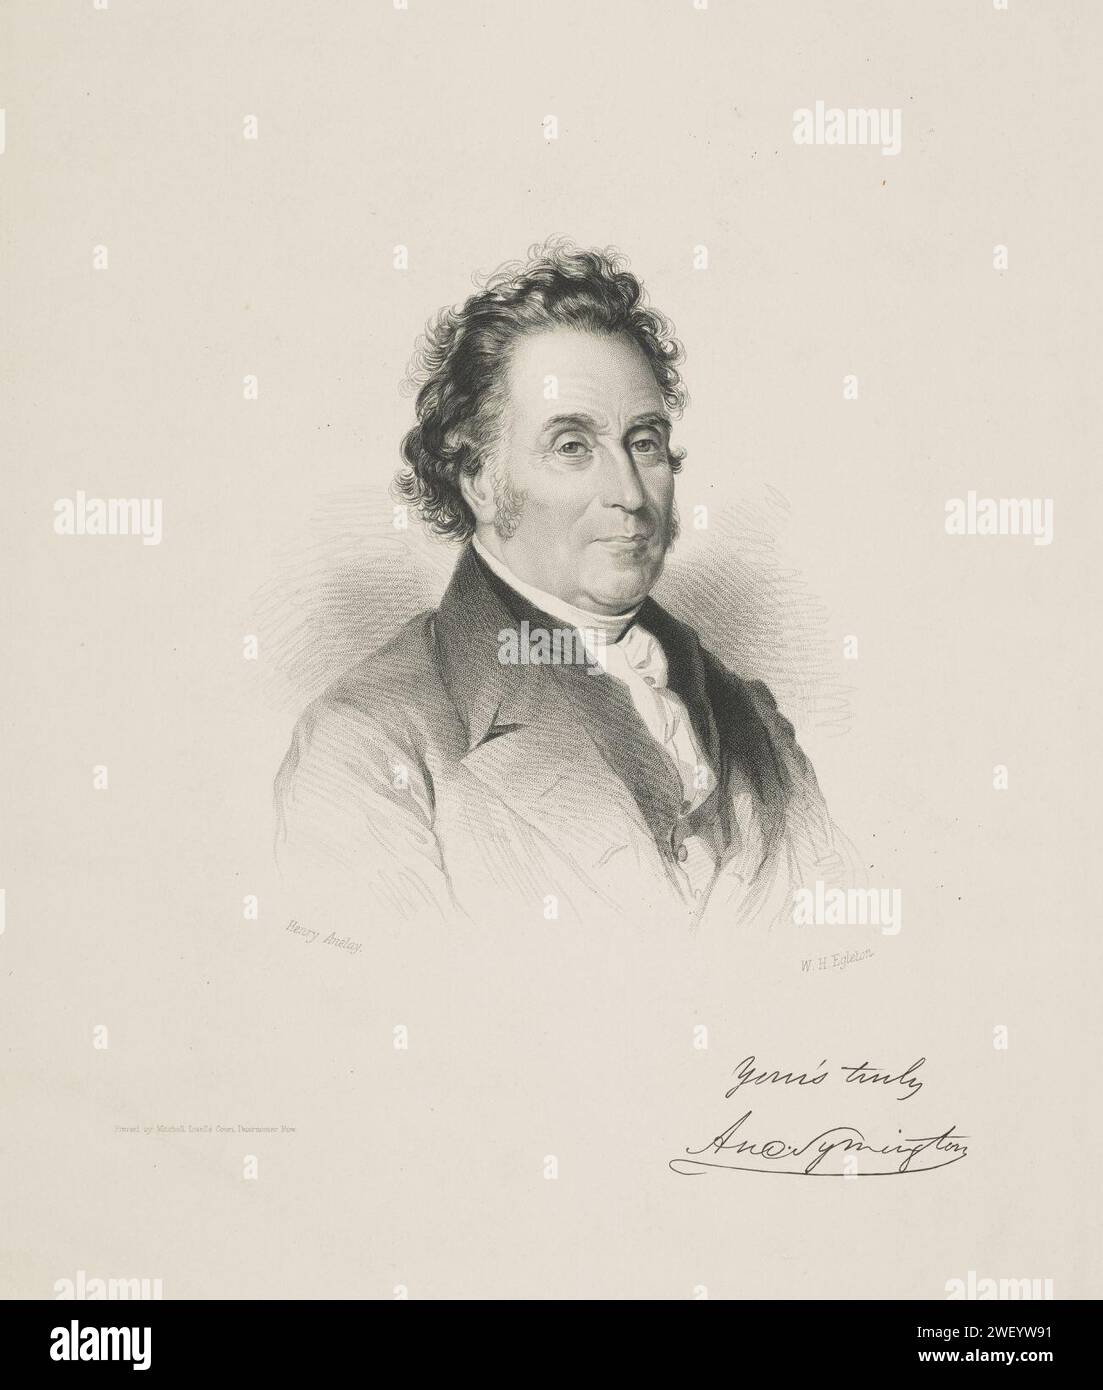 Andrew Symington by William Henry Egleton. Stock Photo